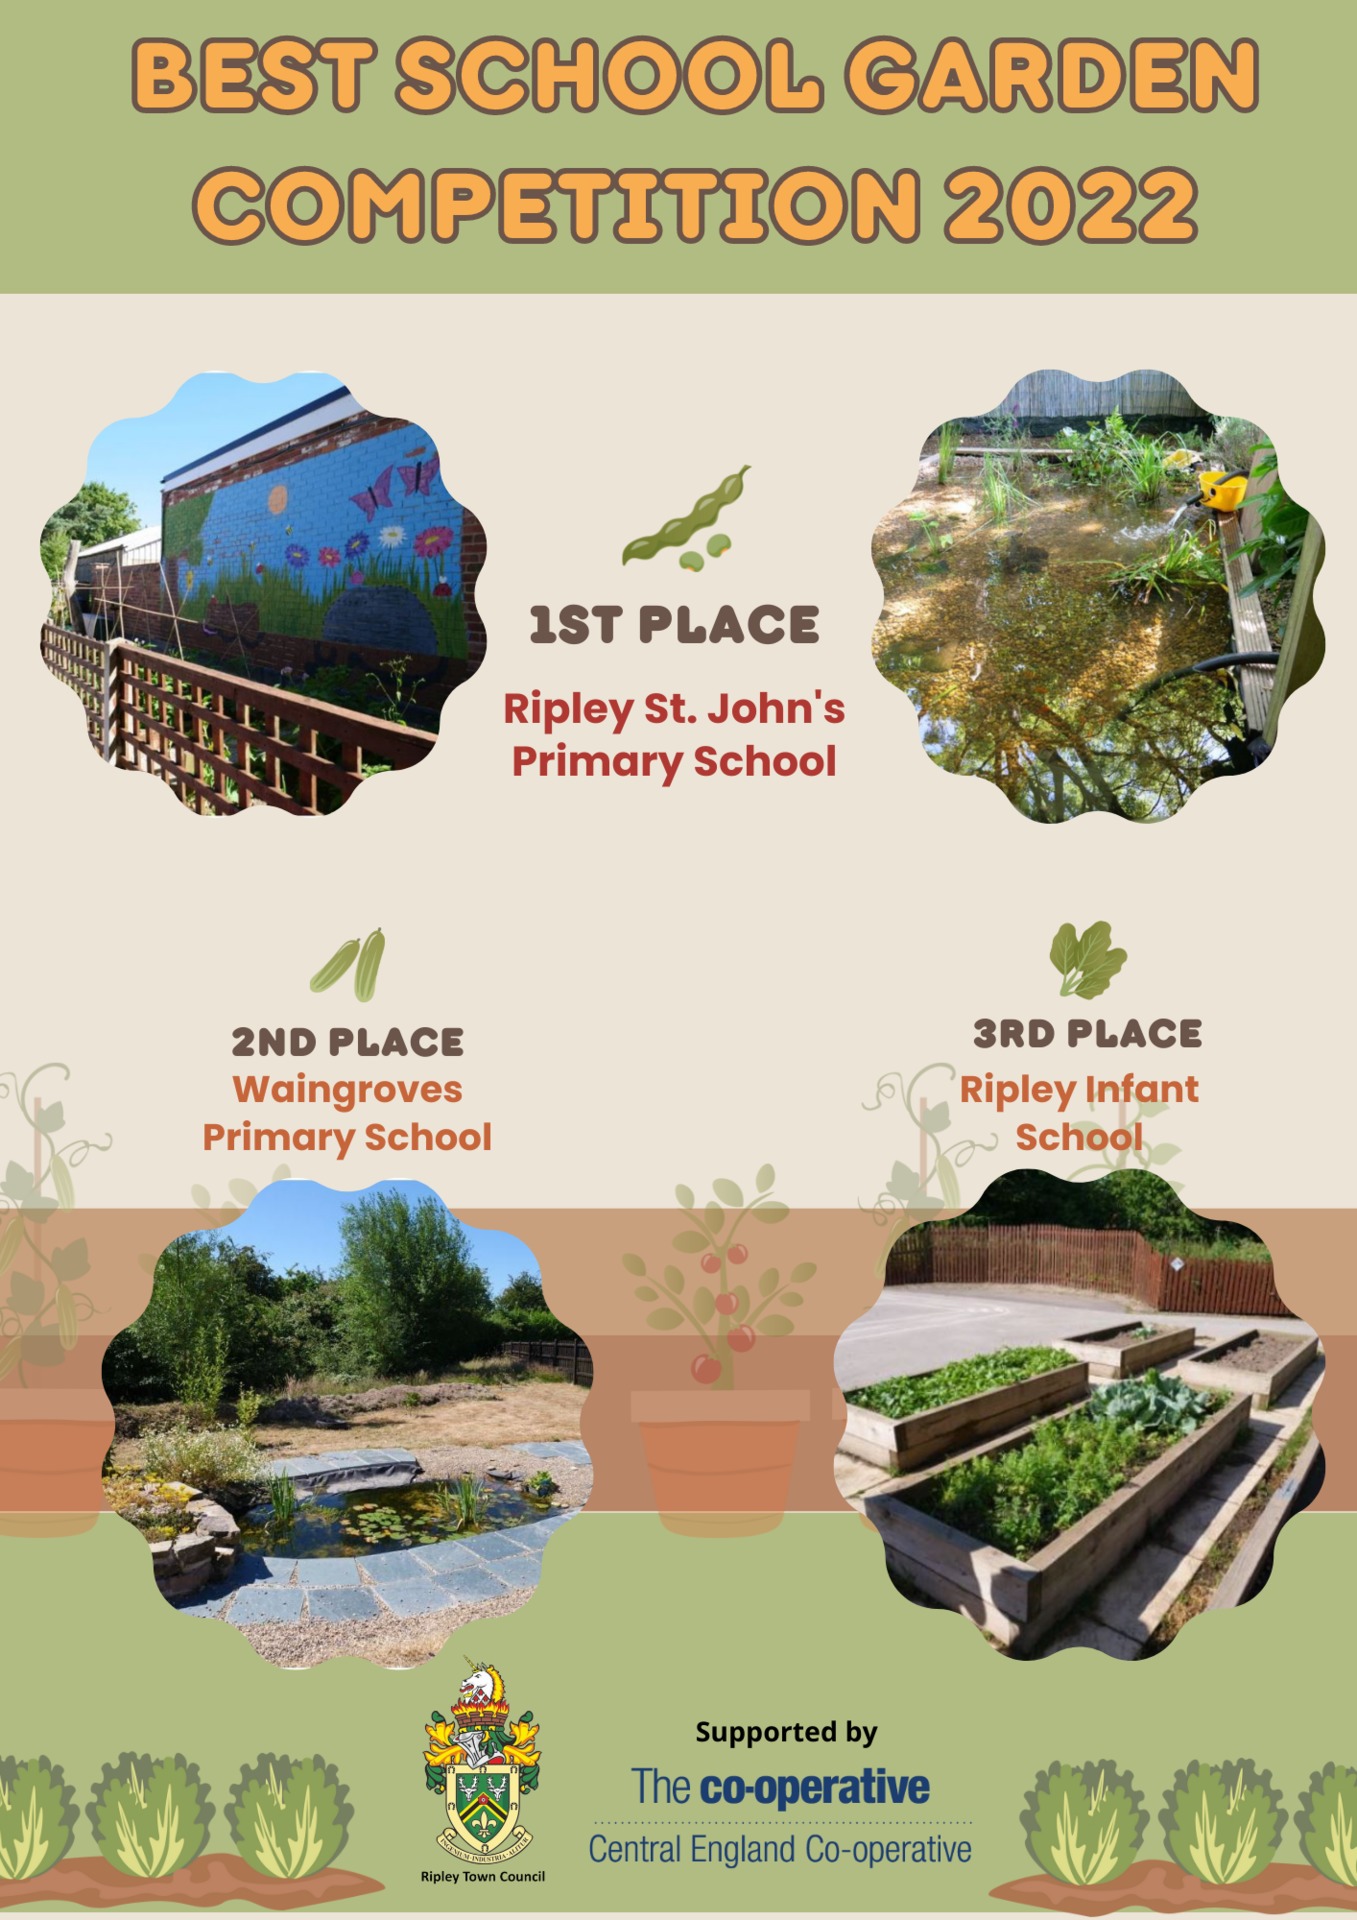 Photos of winning school gardens